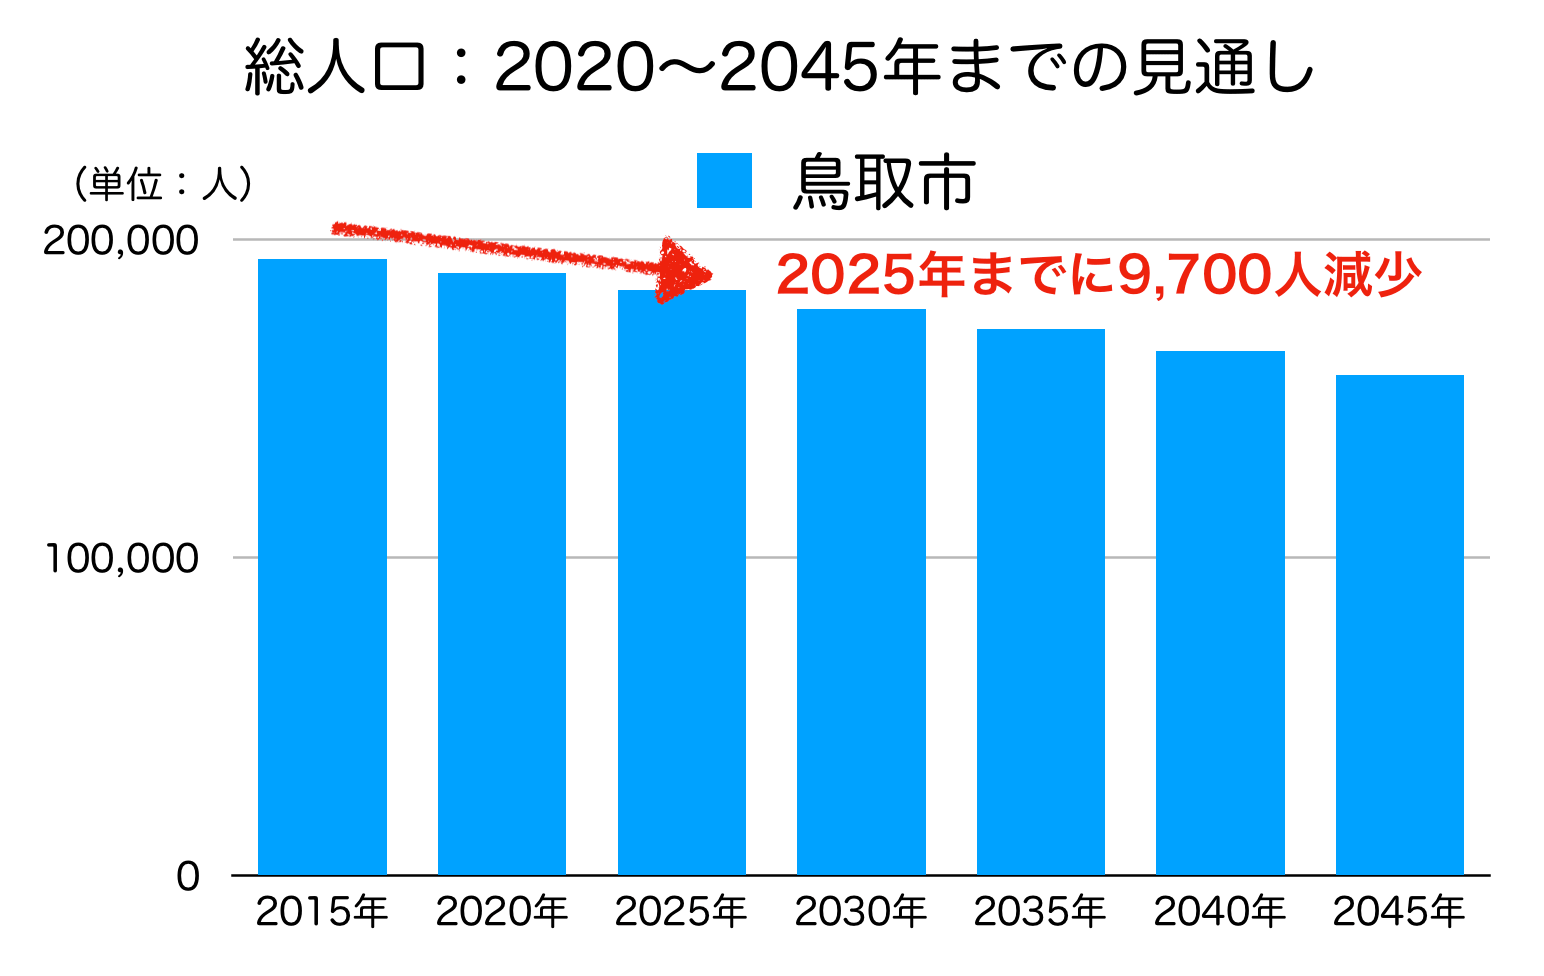 鳥取市の人口予測